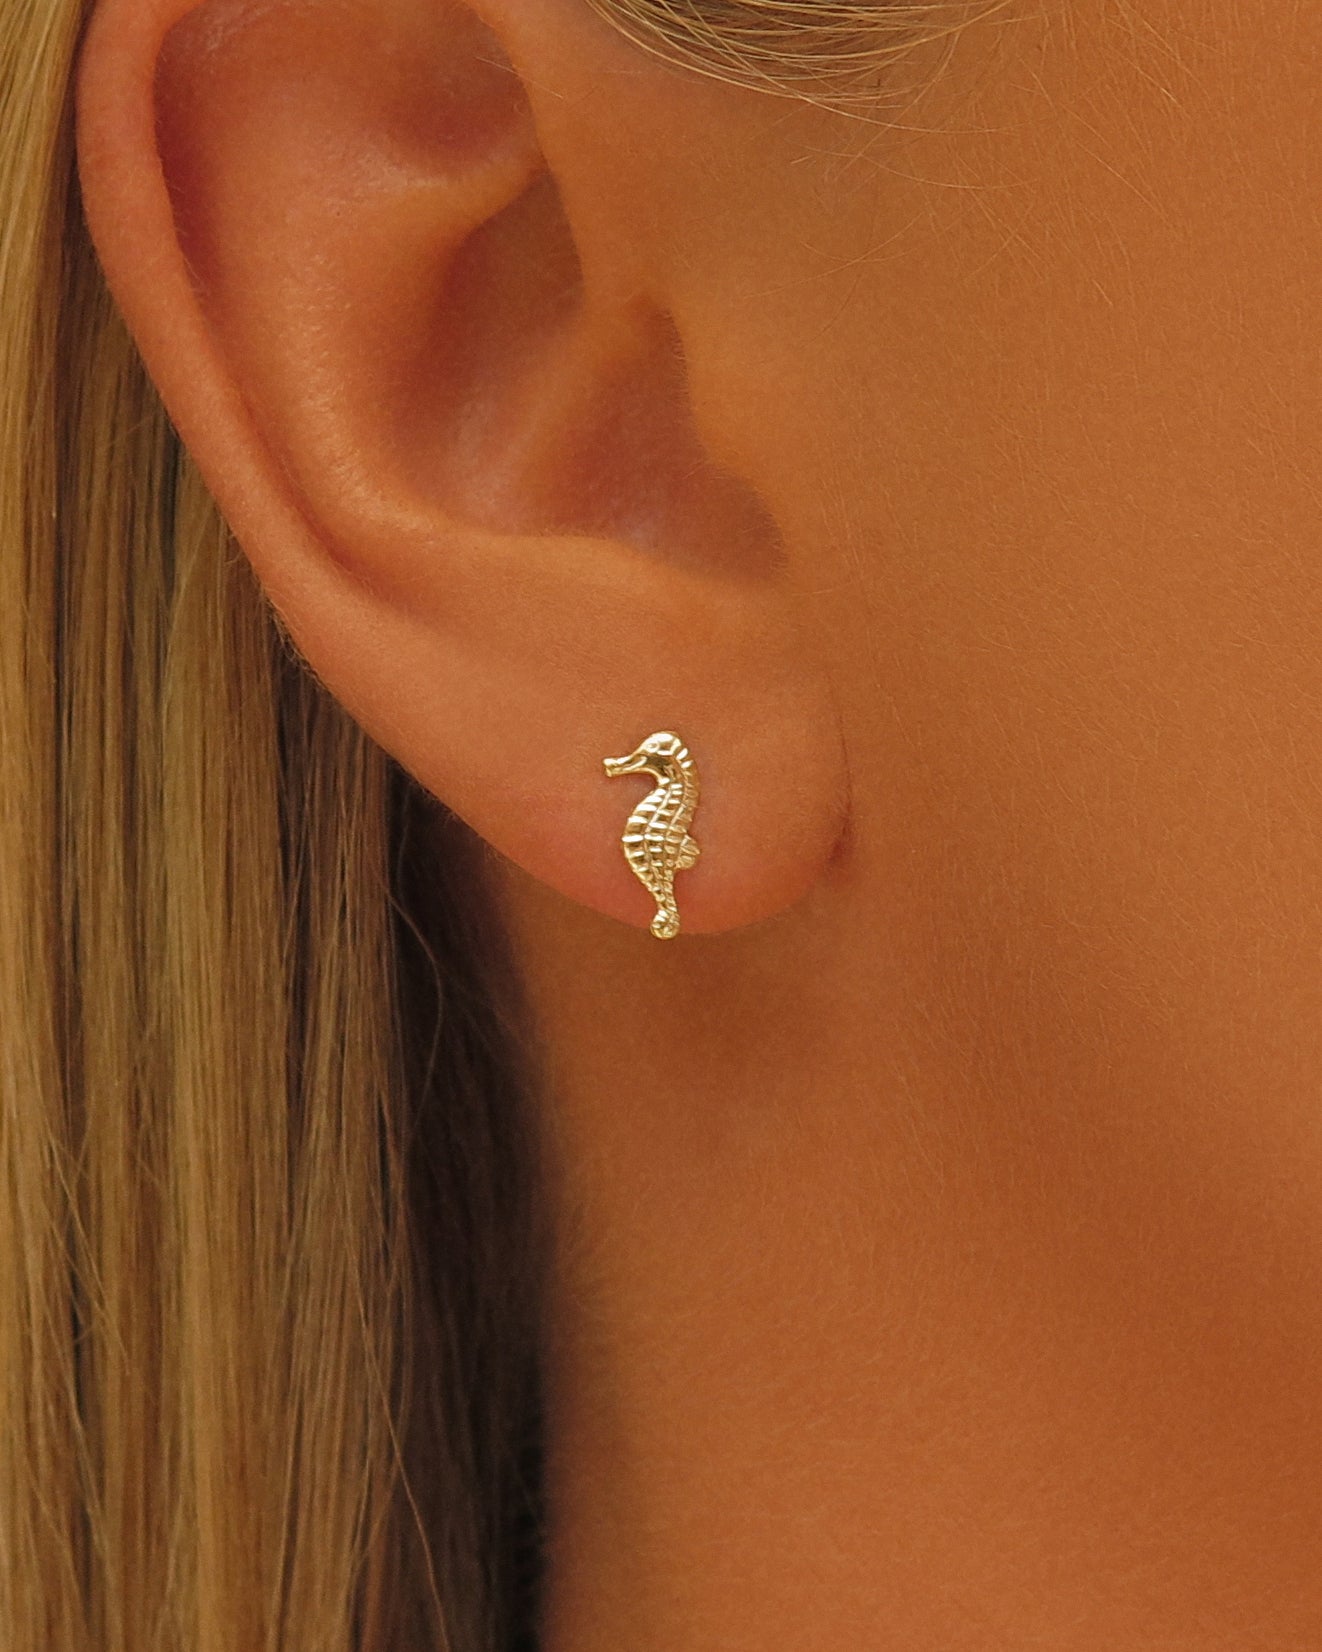 Seahorse Stud Earrings - 14k Yellow Gold Fill